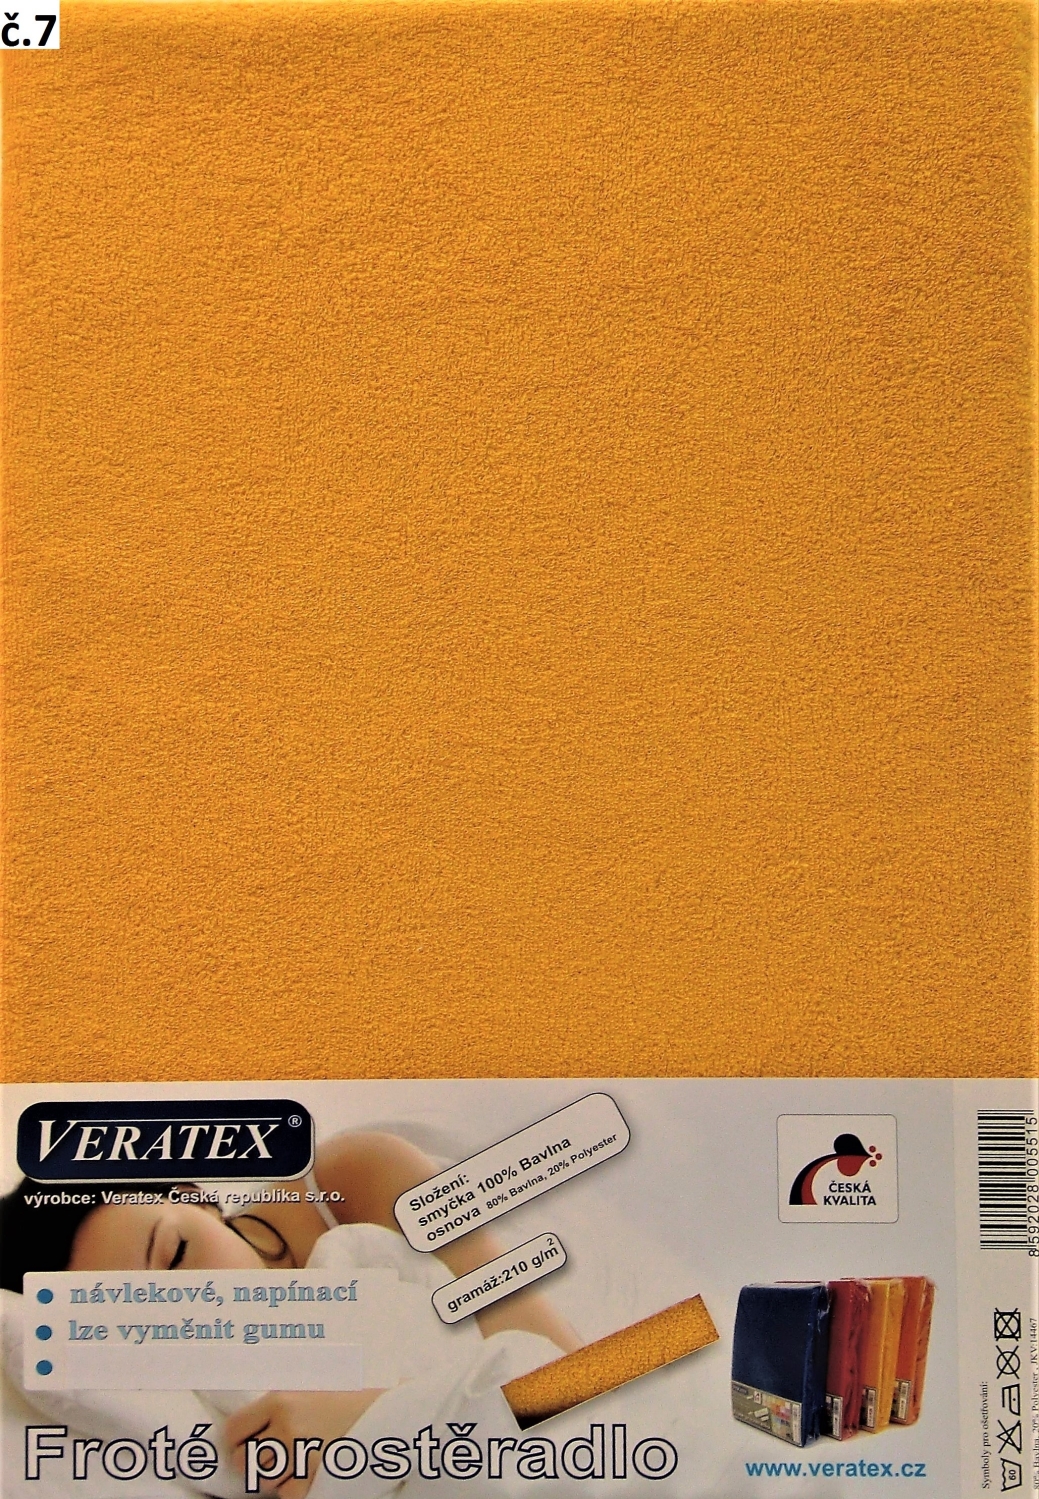 Veratex Froté prostěradlo postýlka 70x160/15 cm (č. 7-sytě žlutá)